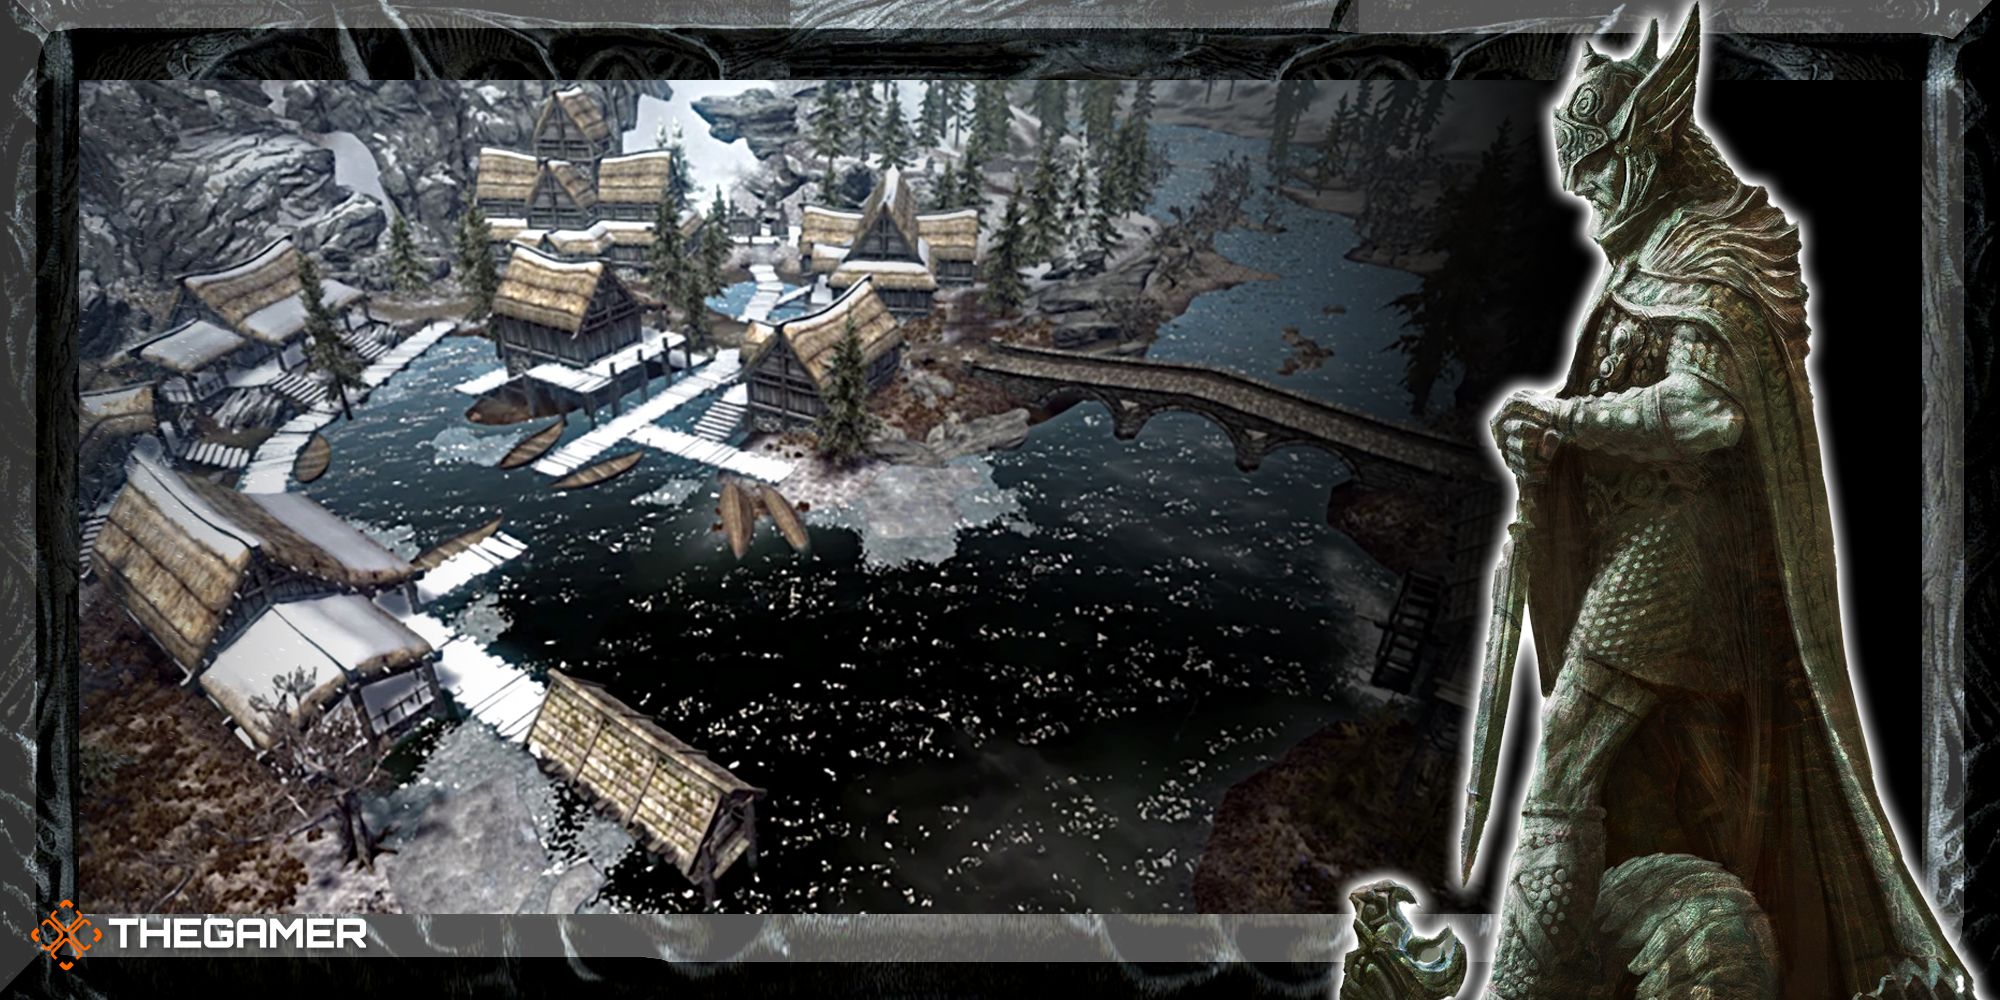 Art and screenshot from Skyrim.